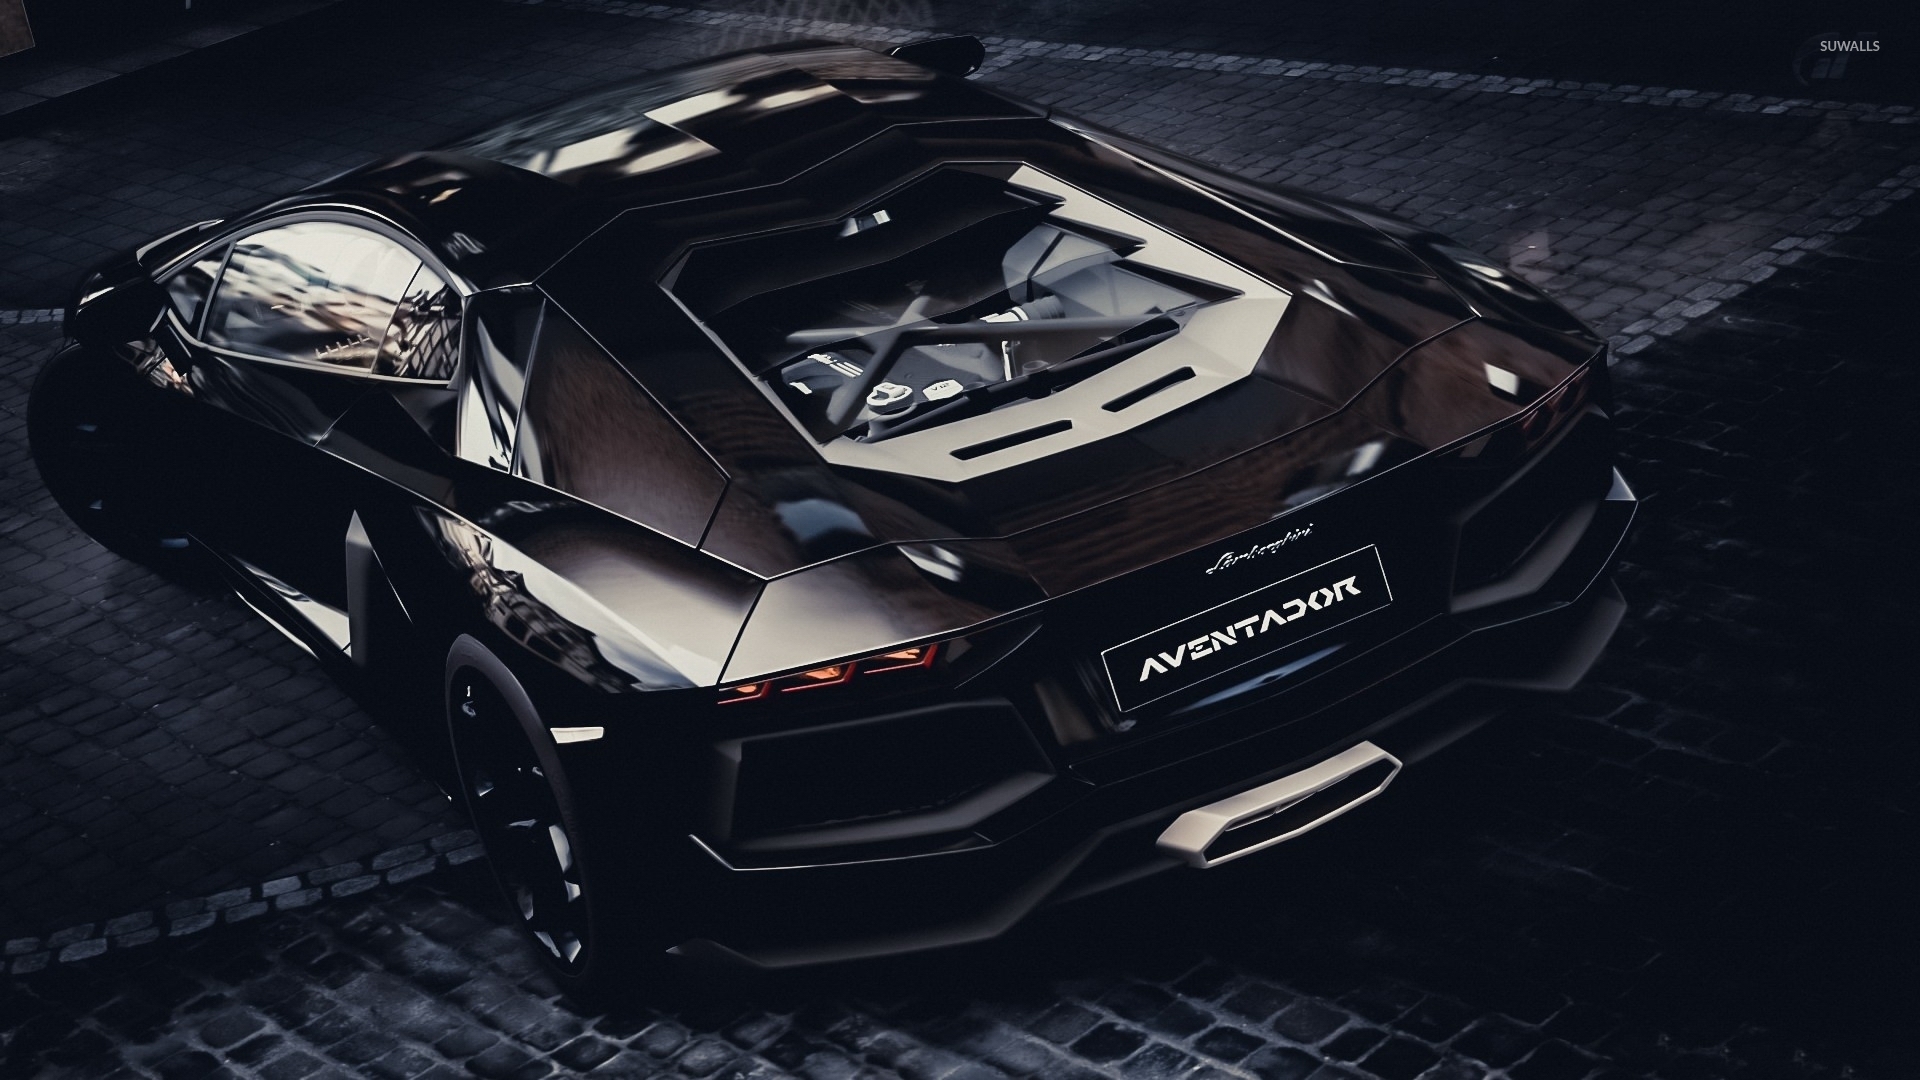 Top view of a black Lamborghini Aventador wallpaper - Car wallpapers -  #52404